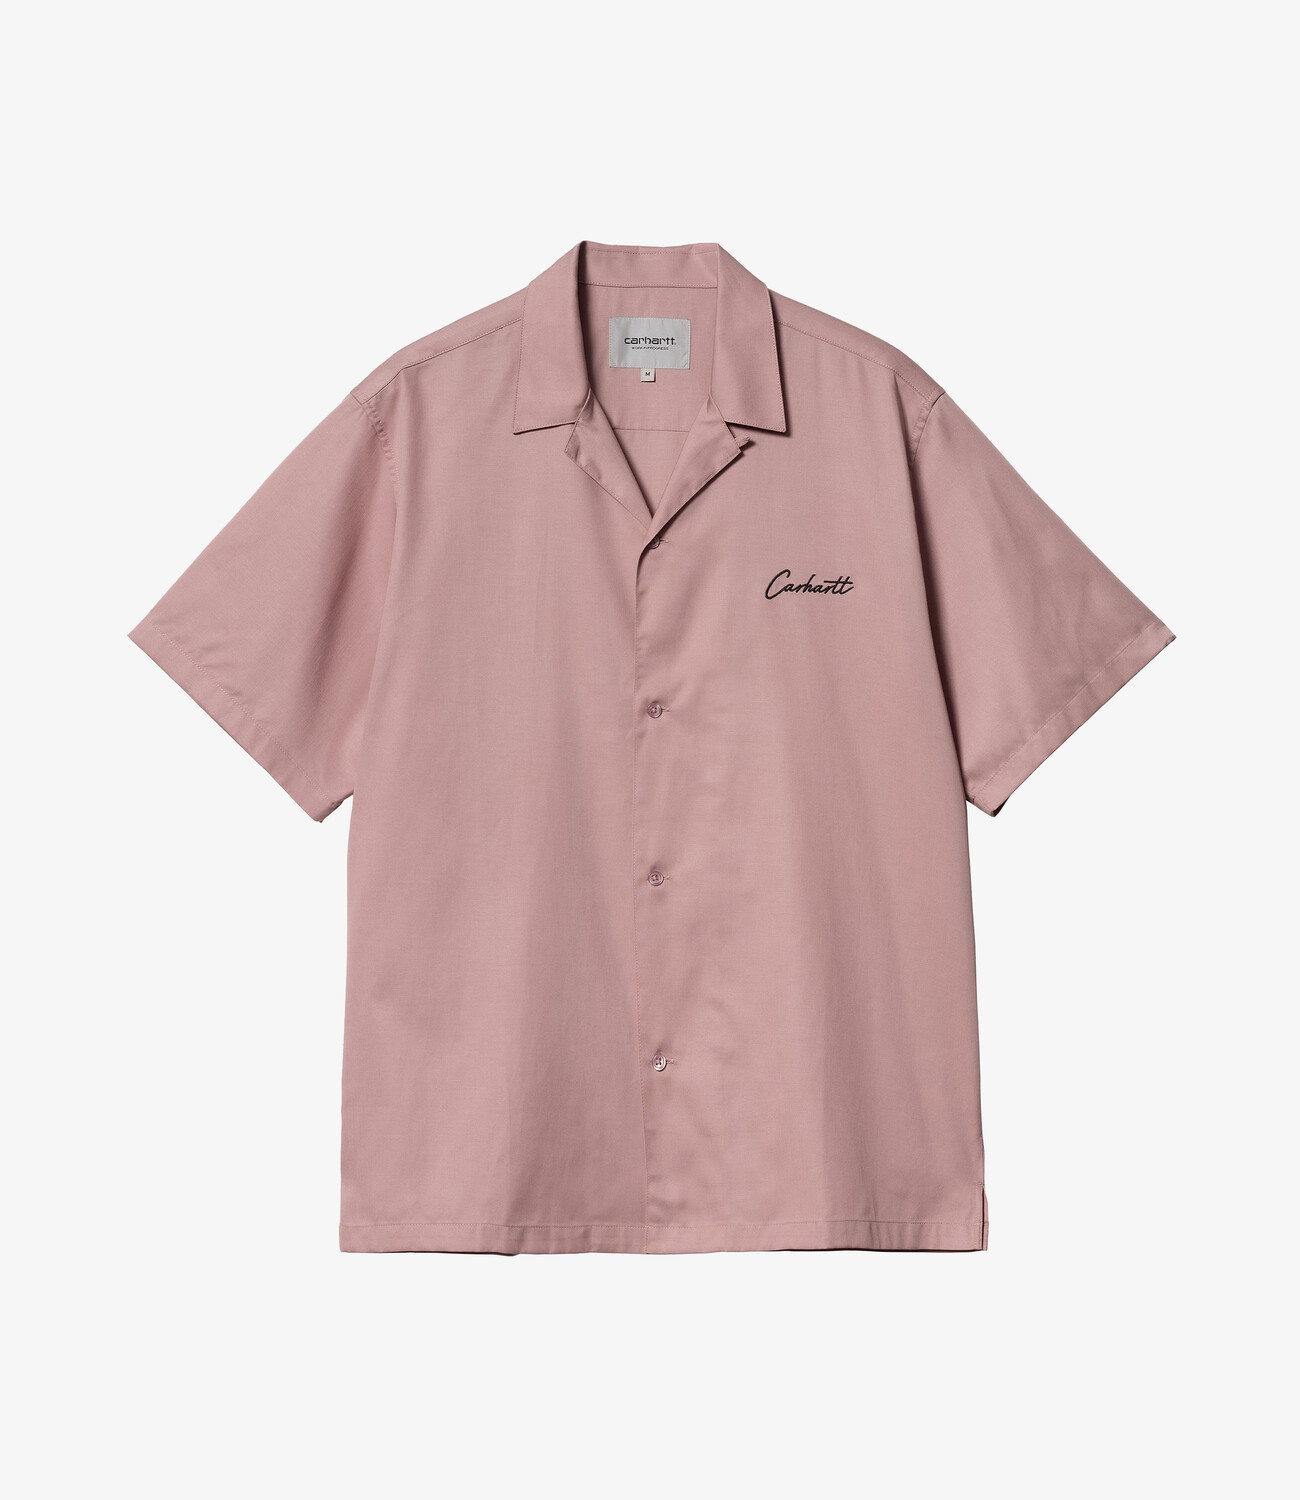 Delray shirt - Glassy pink / black